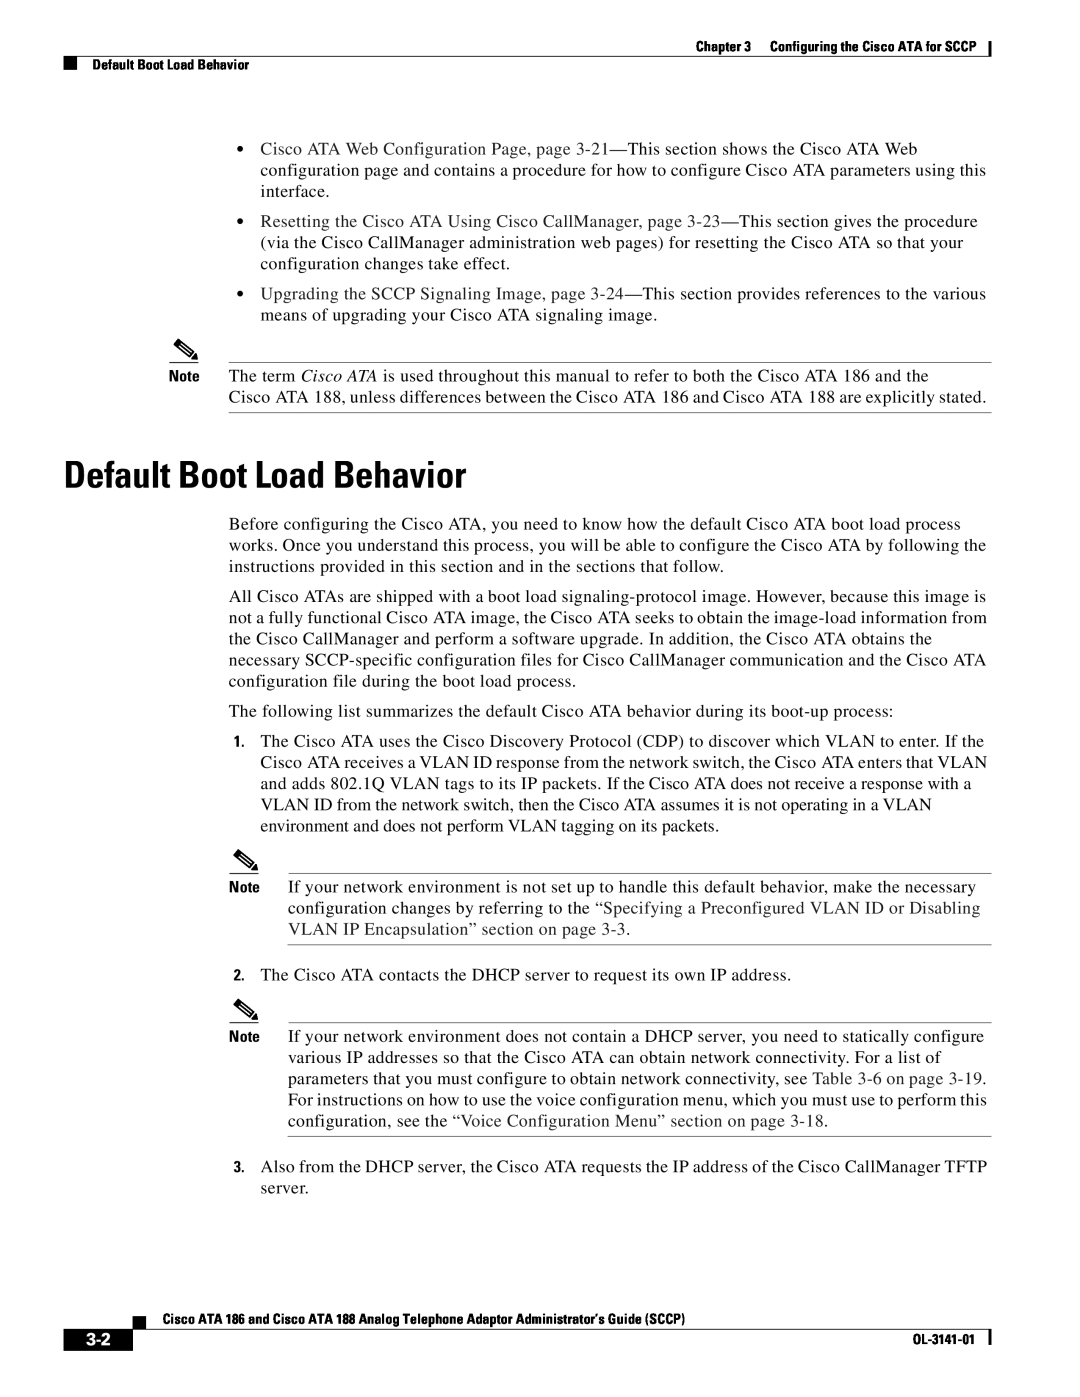 Cisco Systems ATA 186, ATA 188 manual Default Boot Load Behavior 